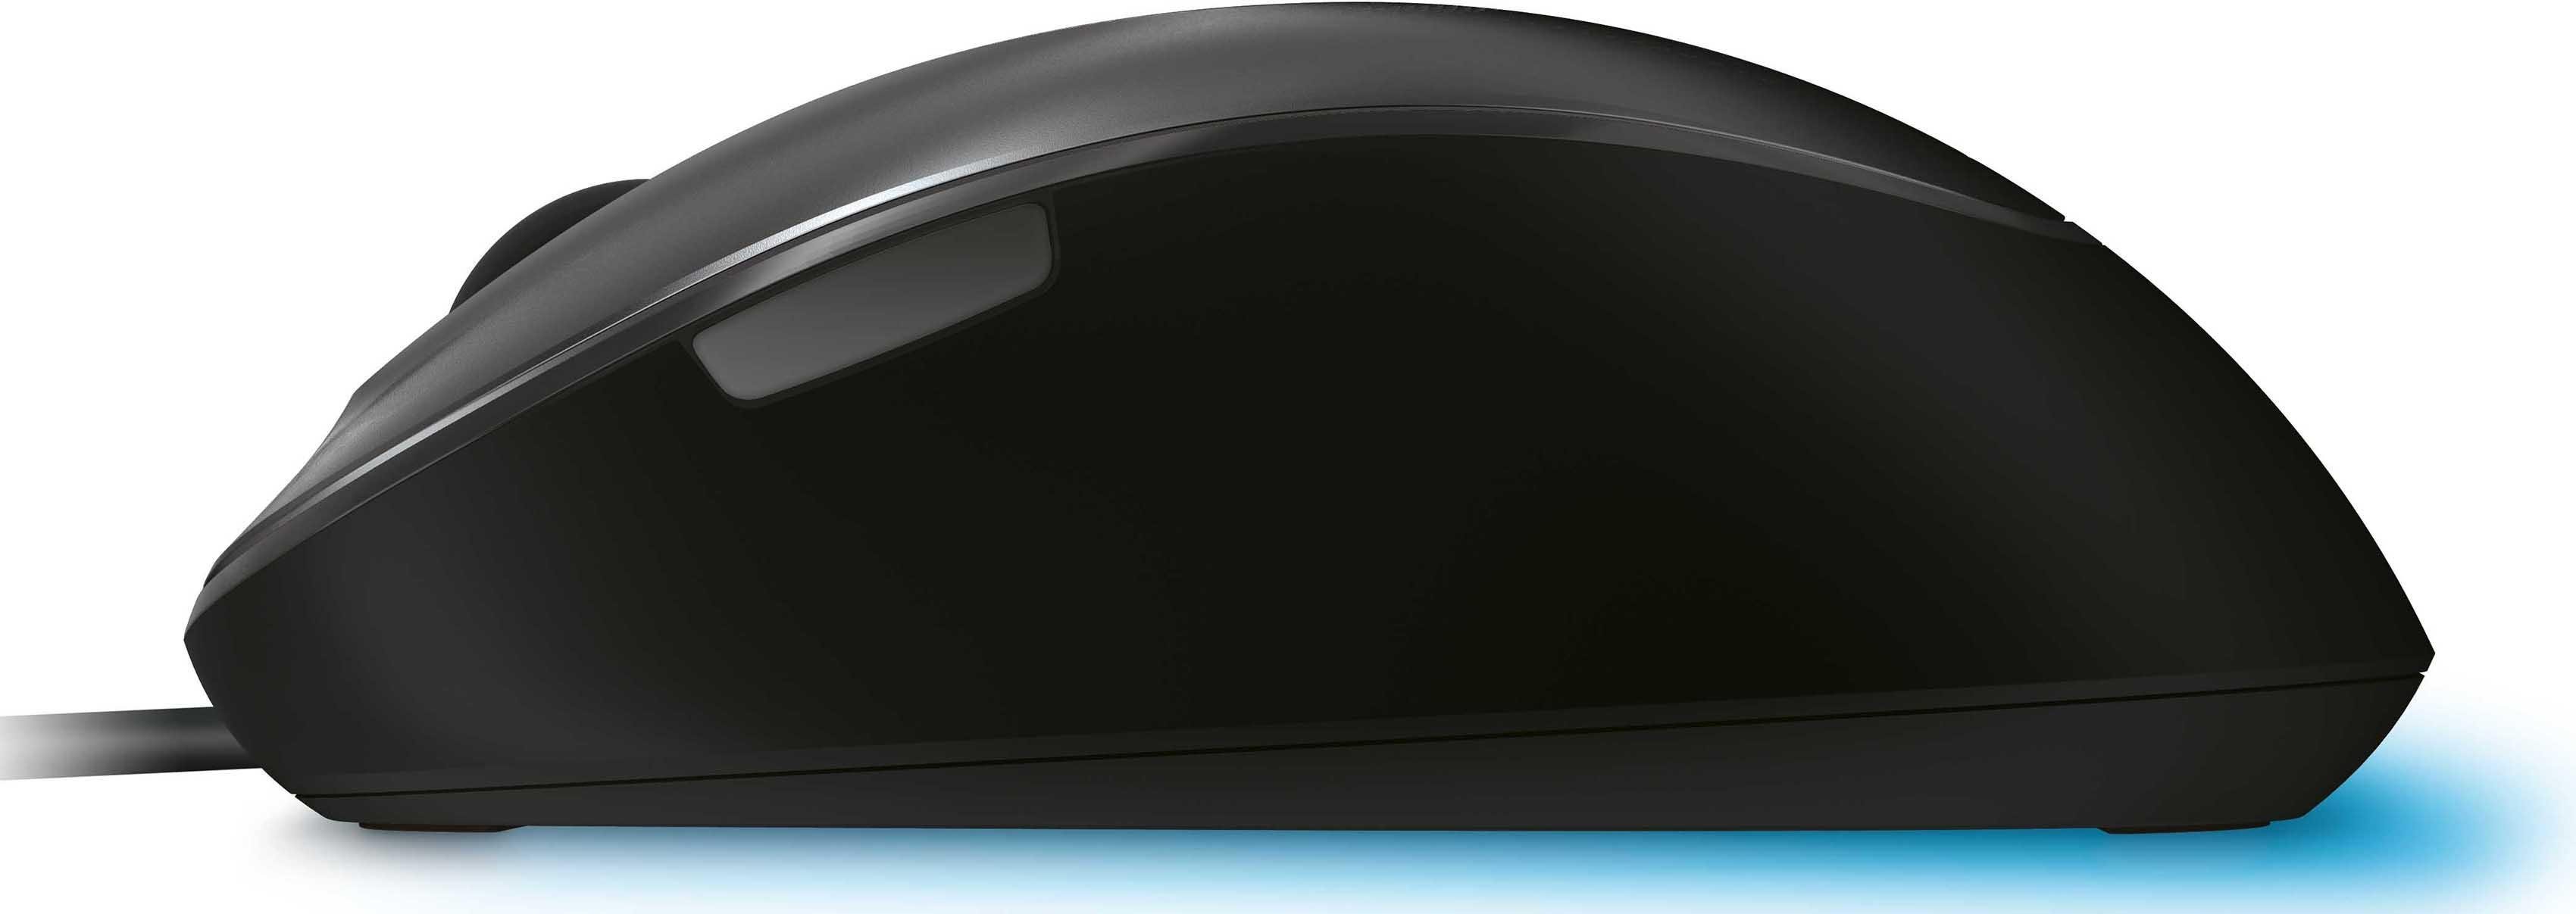 (kabelgebunden) Maus Comfort Microsoft Mouse 4500